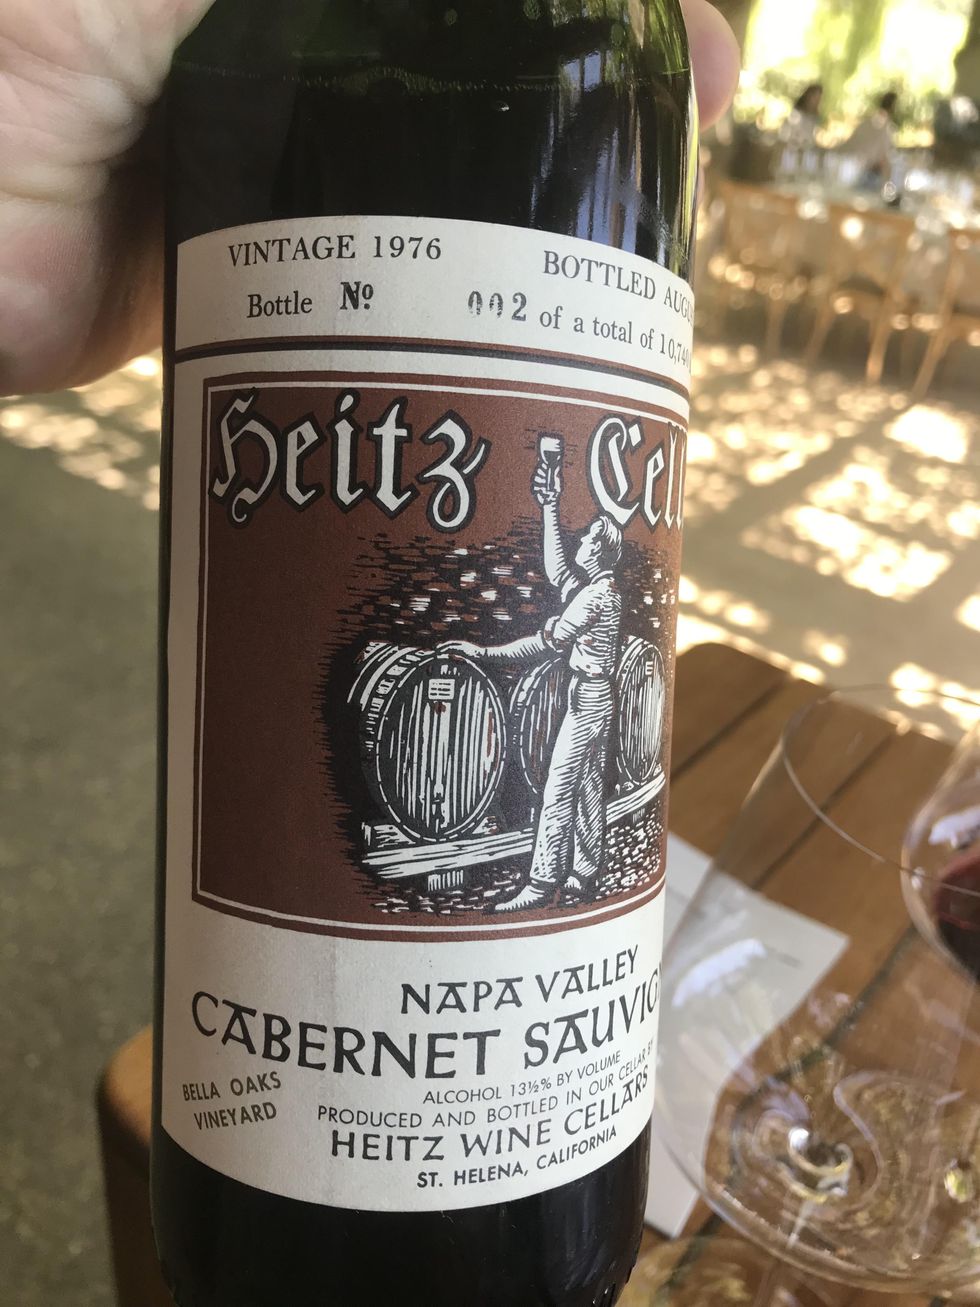 Heitz cellar wine bottle